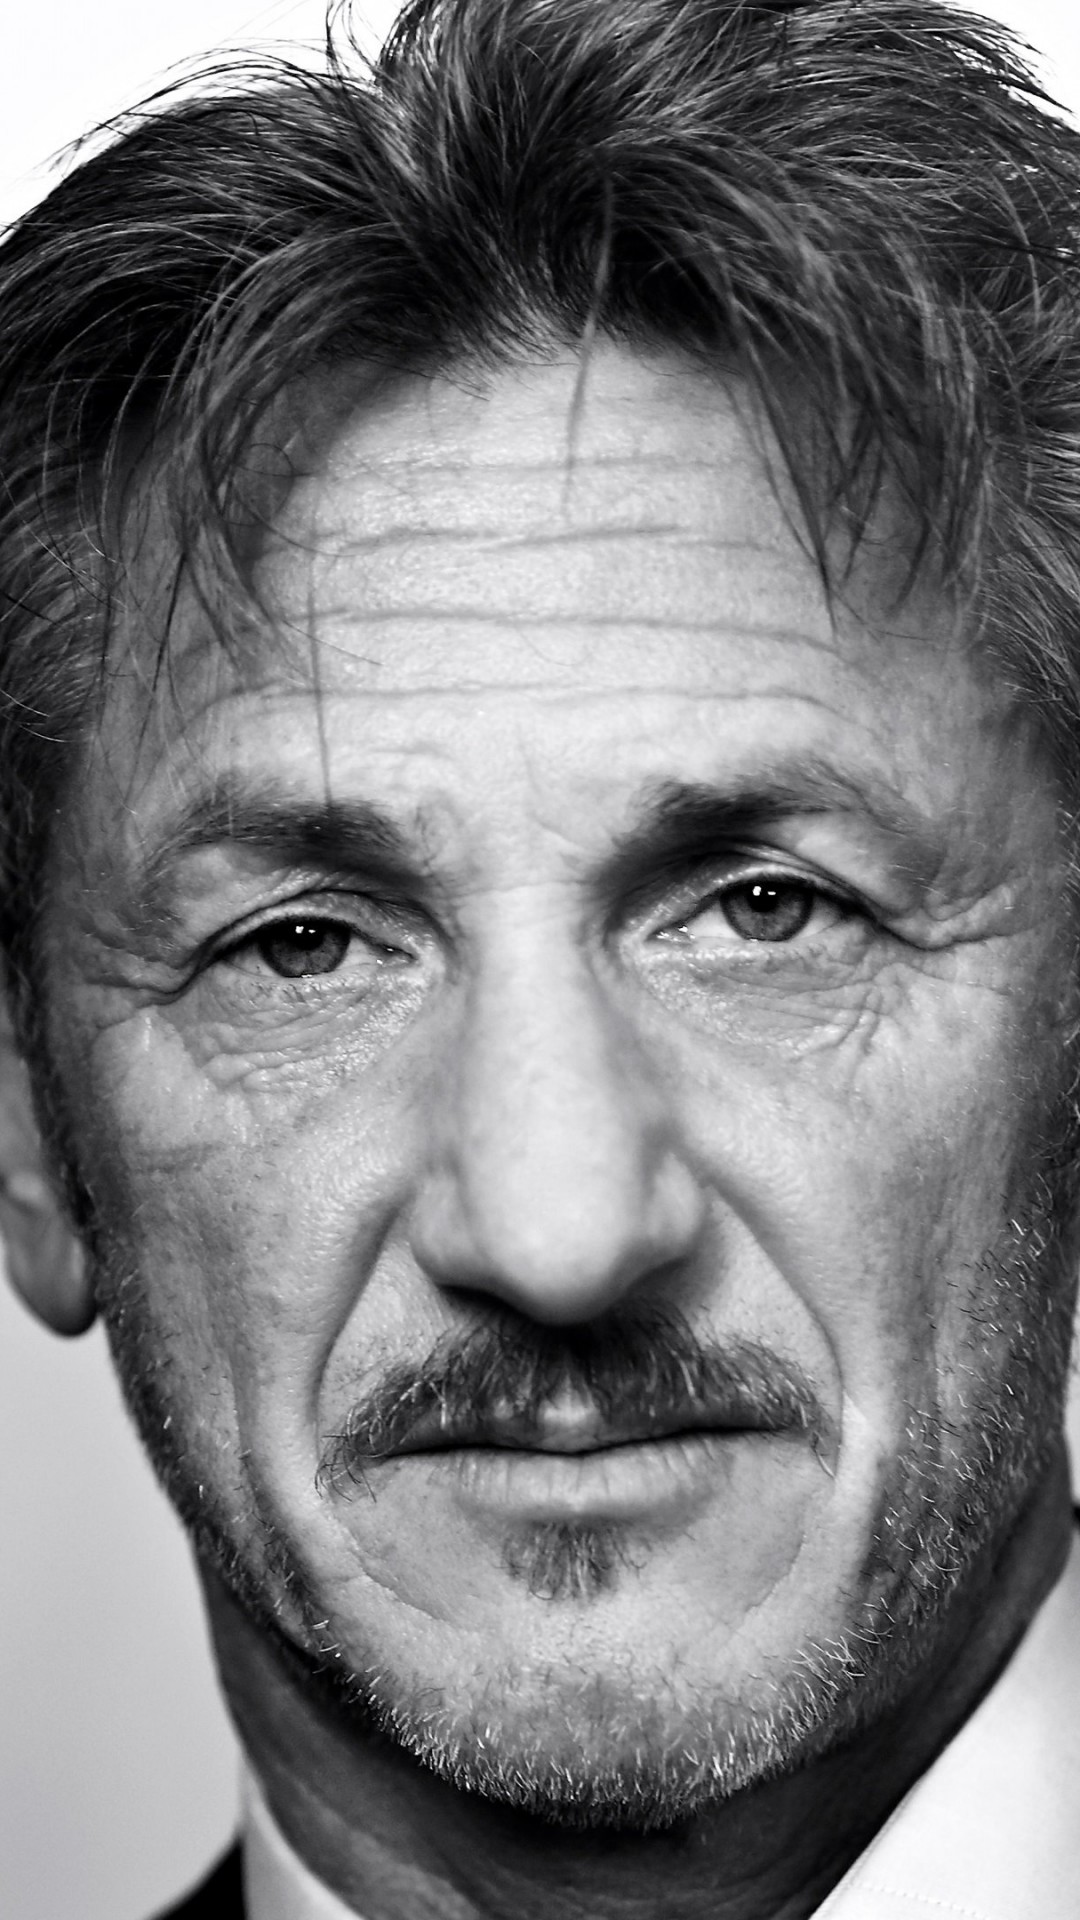 Sean Penn Portrait in Black & White Wallpaper for SONY Xperia Z2